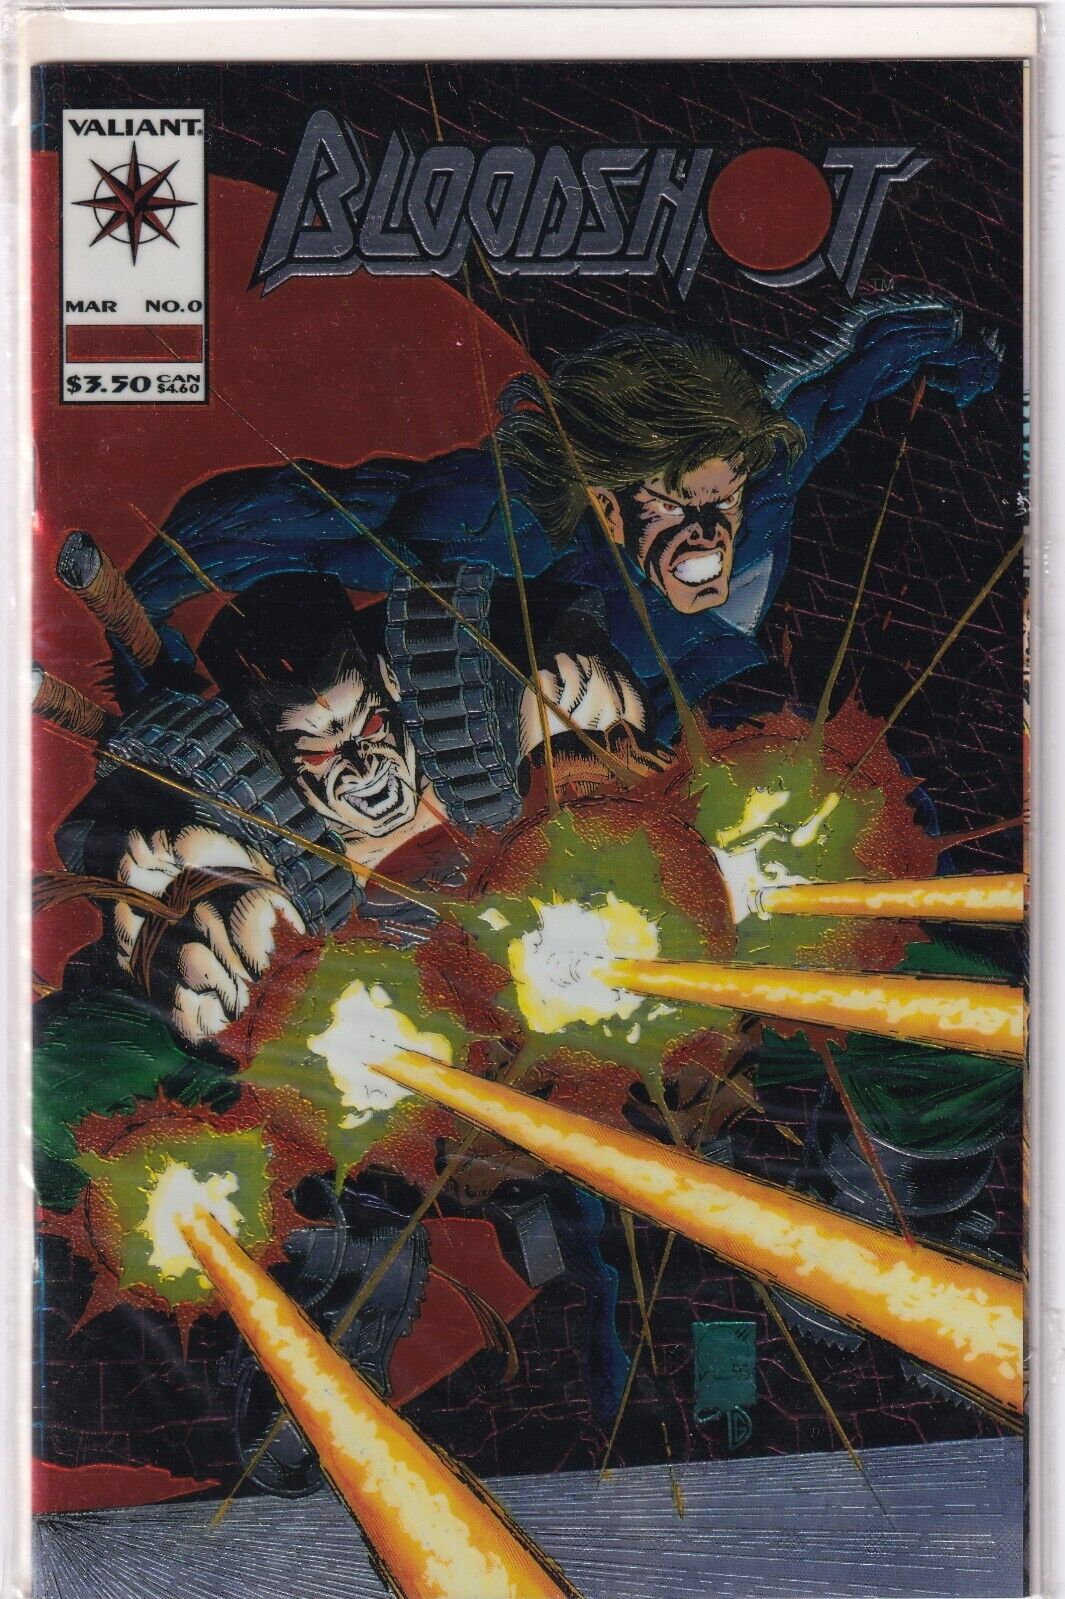 Bloodshot #0 (Valiant Comics, 1994) Foil Chromium Cover